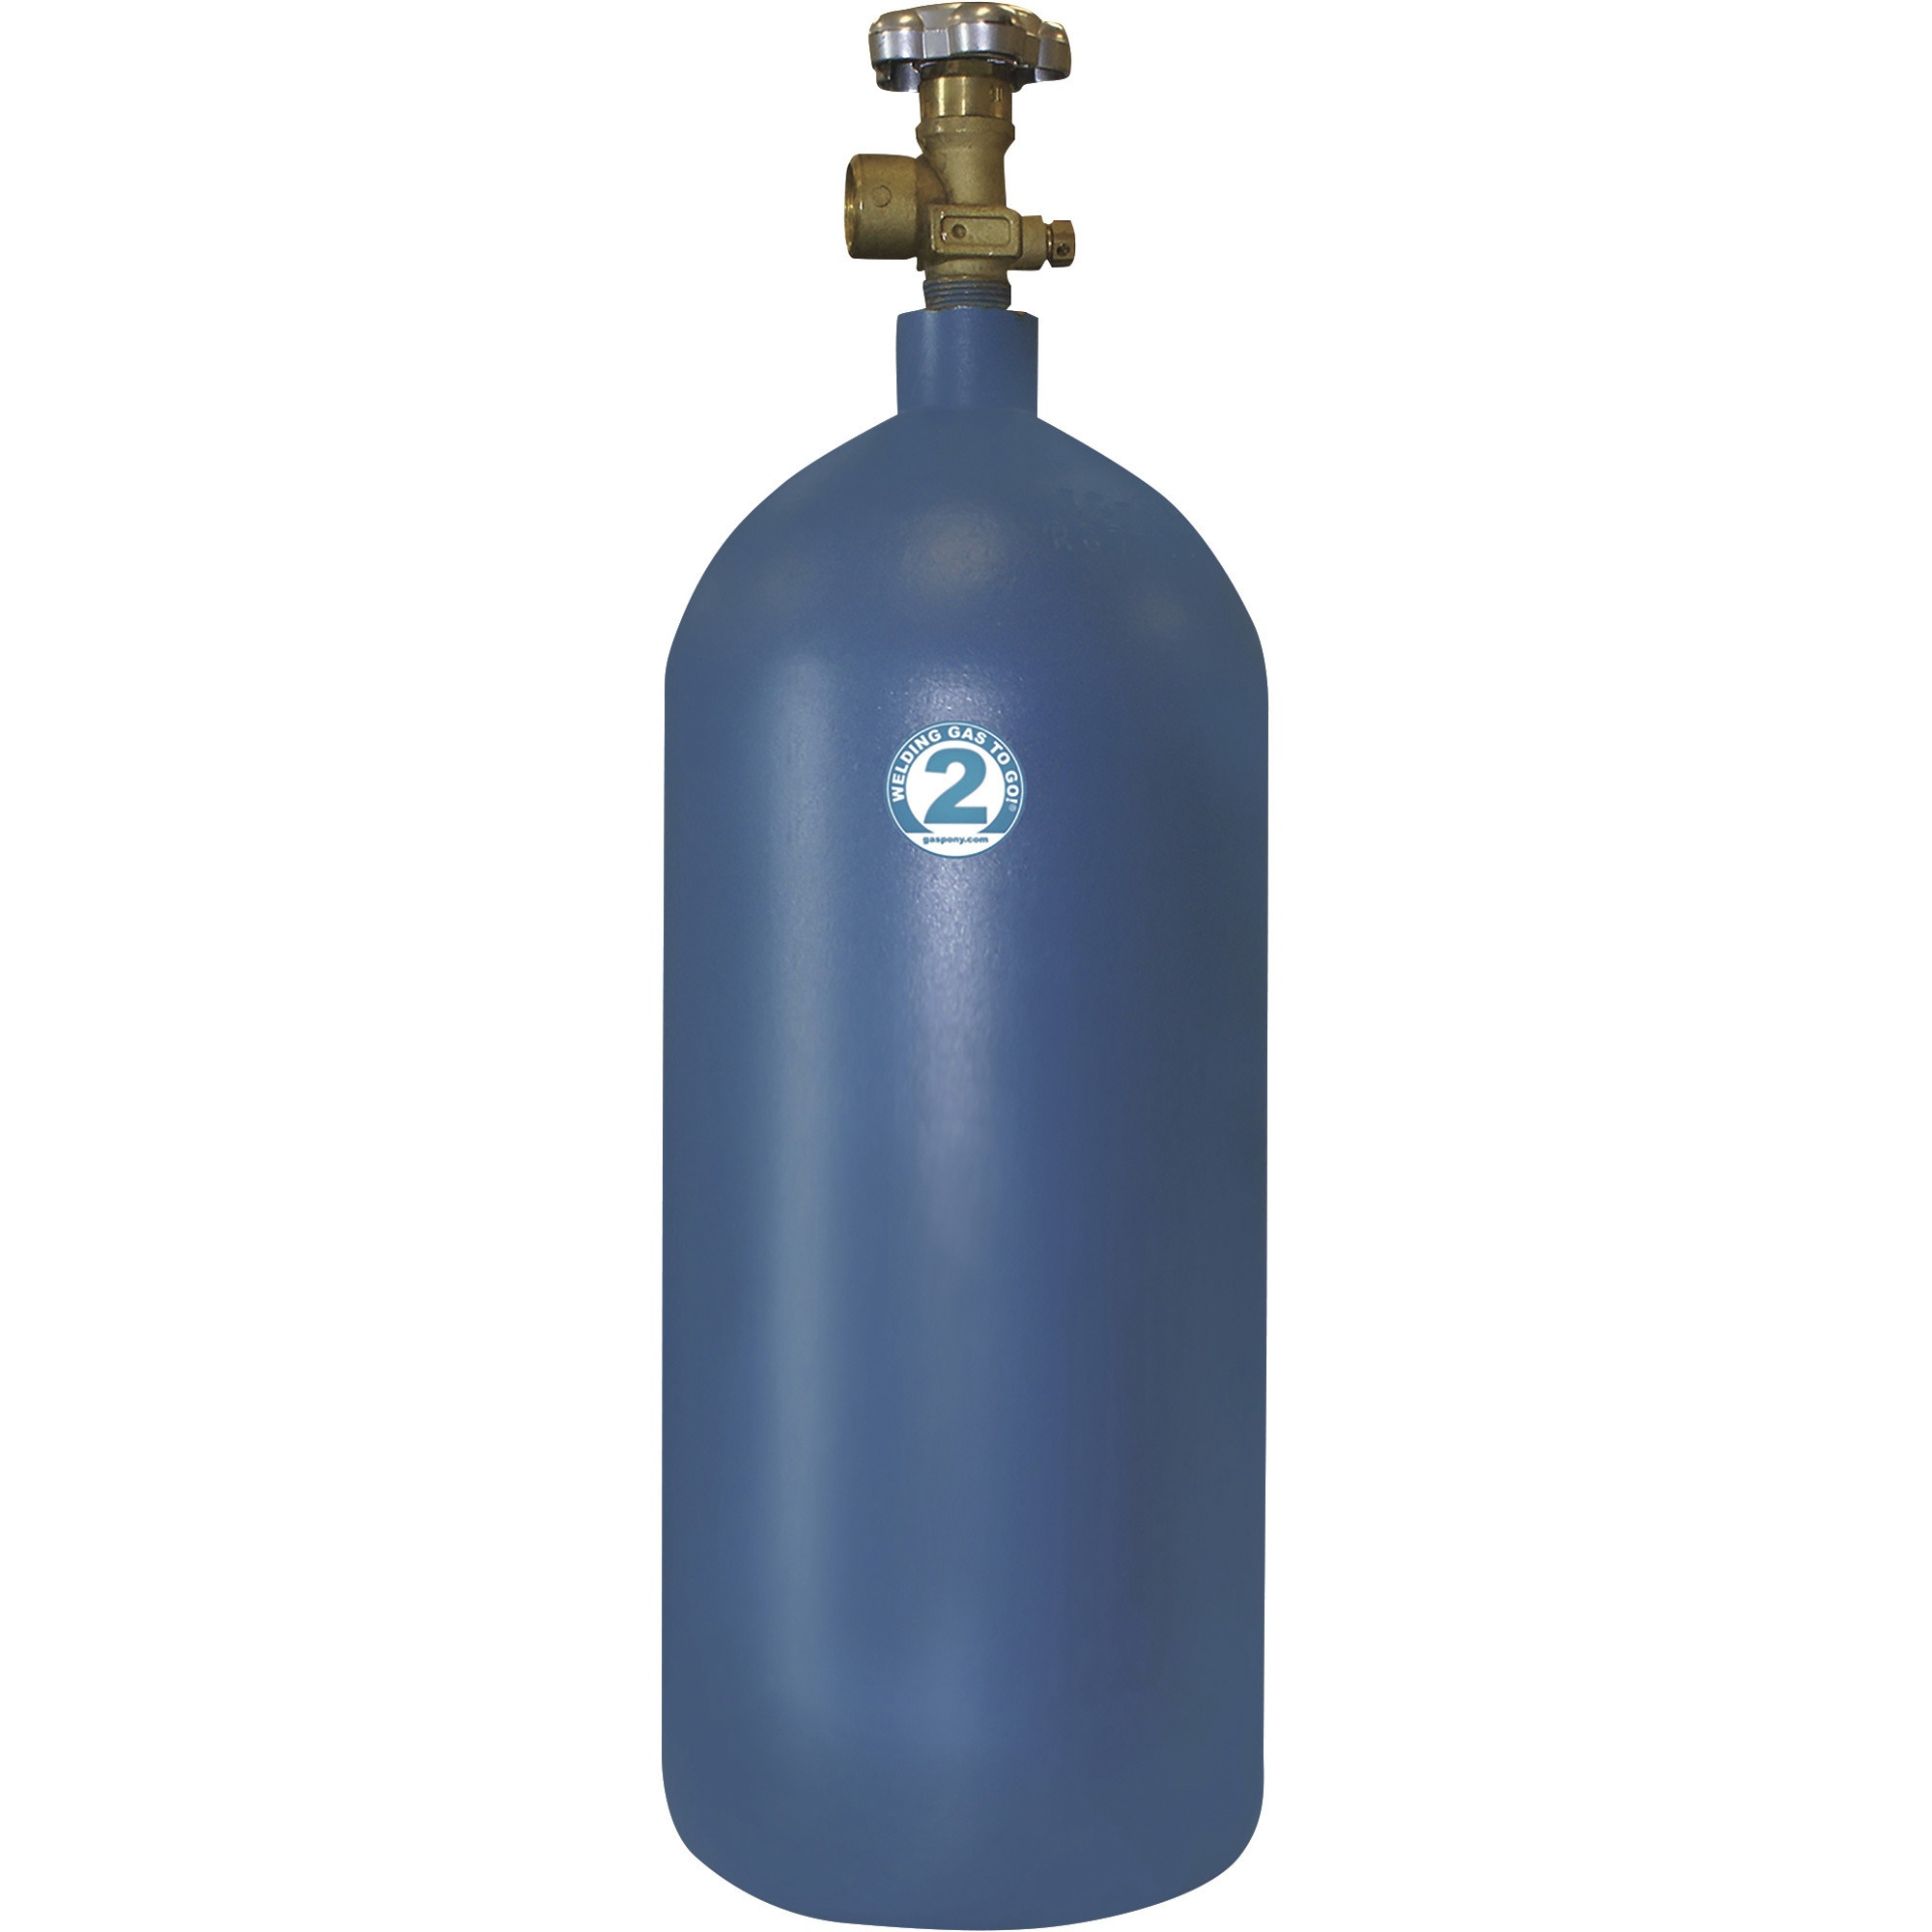 Thoroughbred Welding Gas To Go â Oxygen Welding Gas Cylinder, Size 2, 40 Cu. Ft., Empty, Model OXY2-B